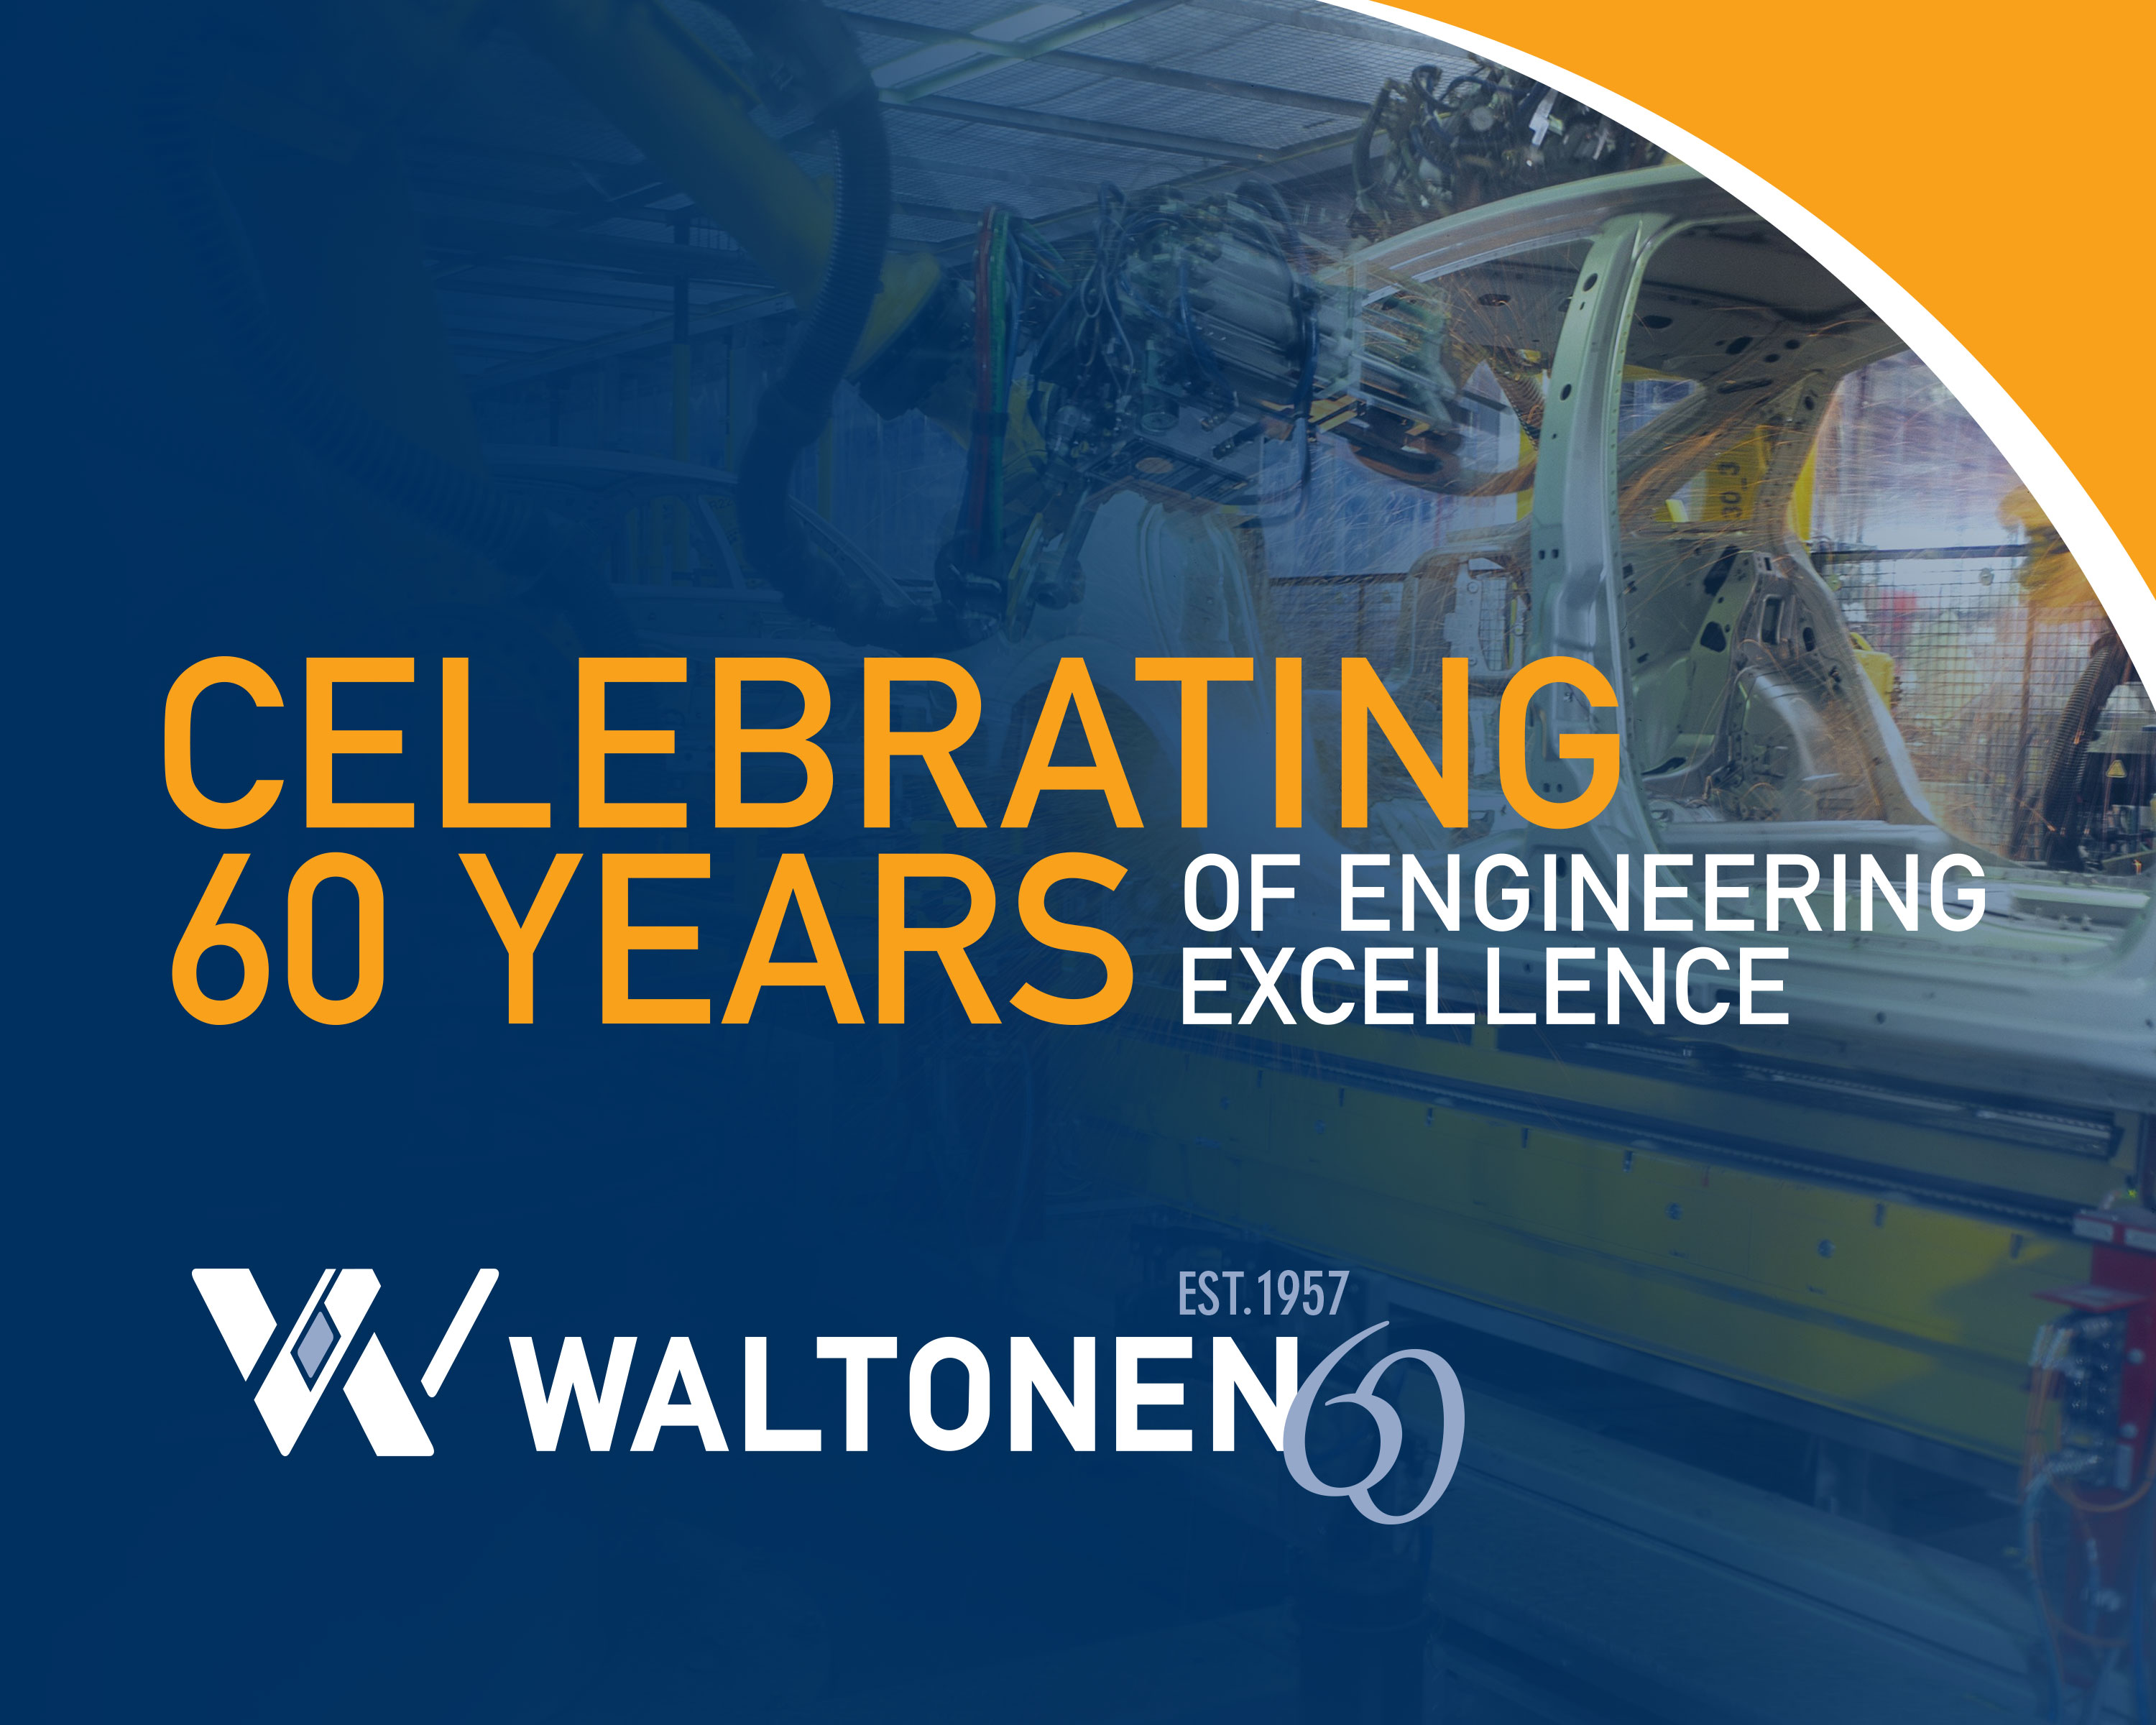 Waltonen Celebrates 60 Years of Engineering Excellence